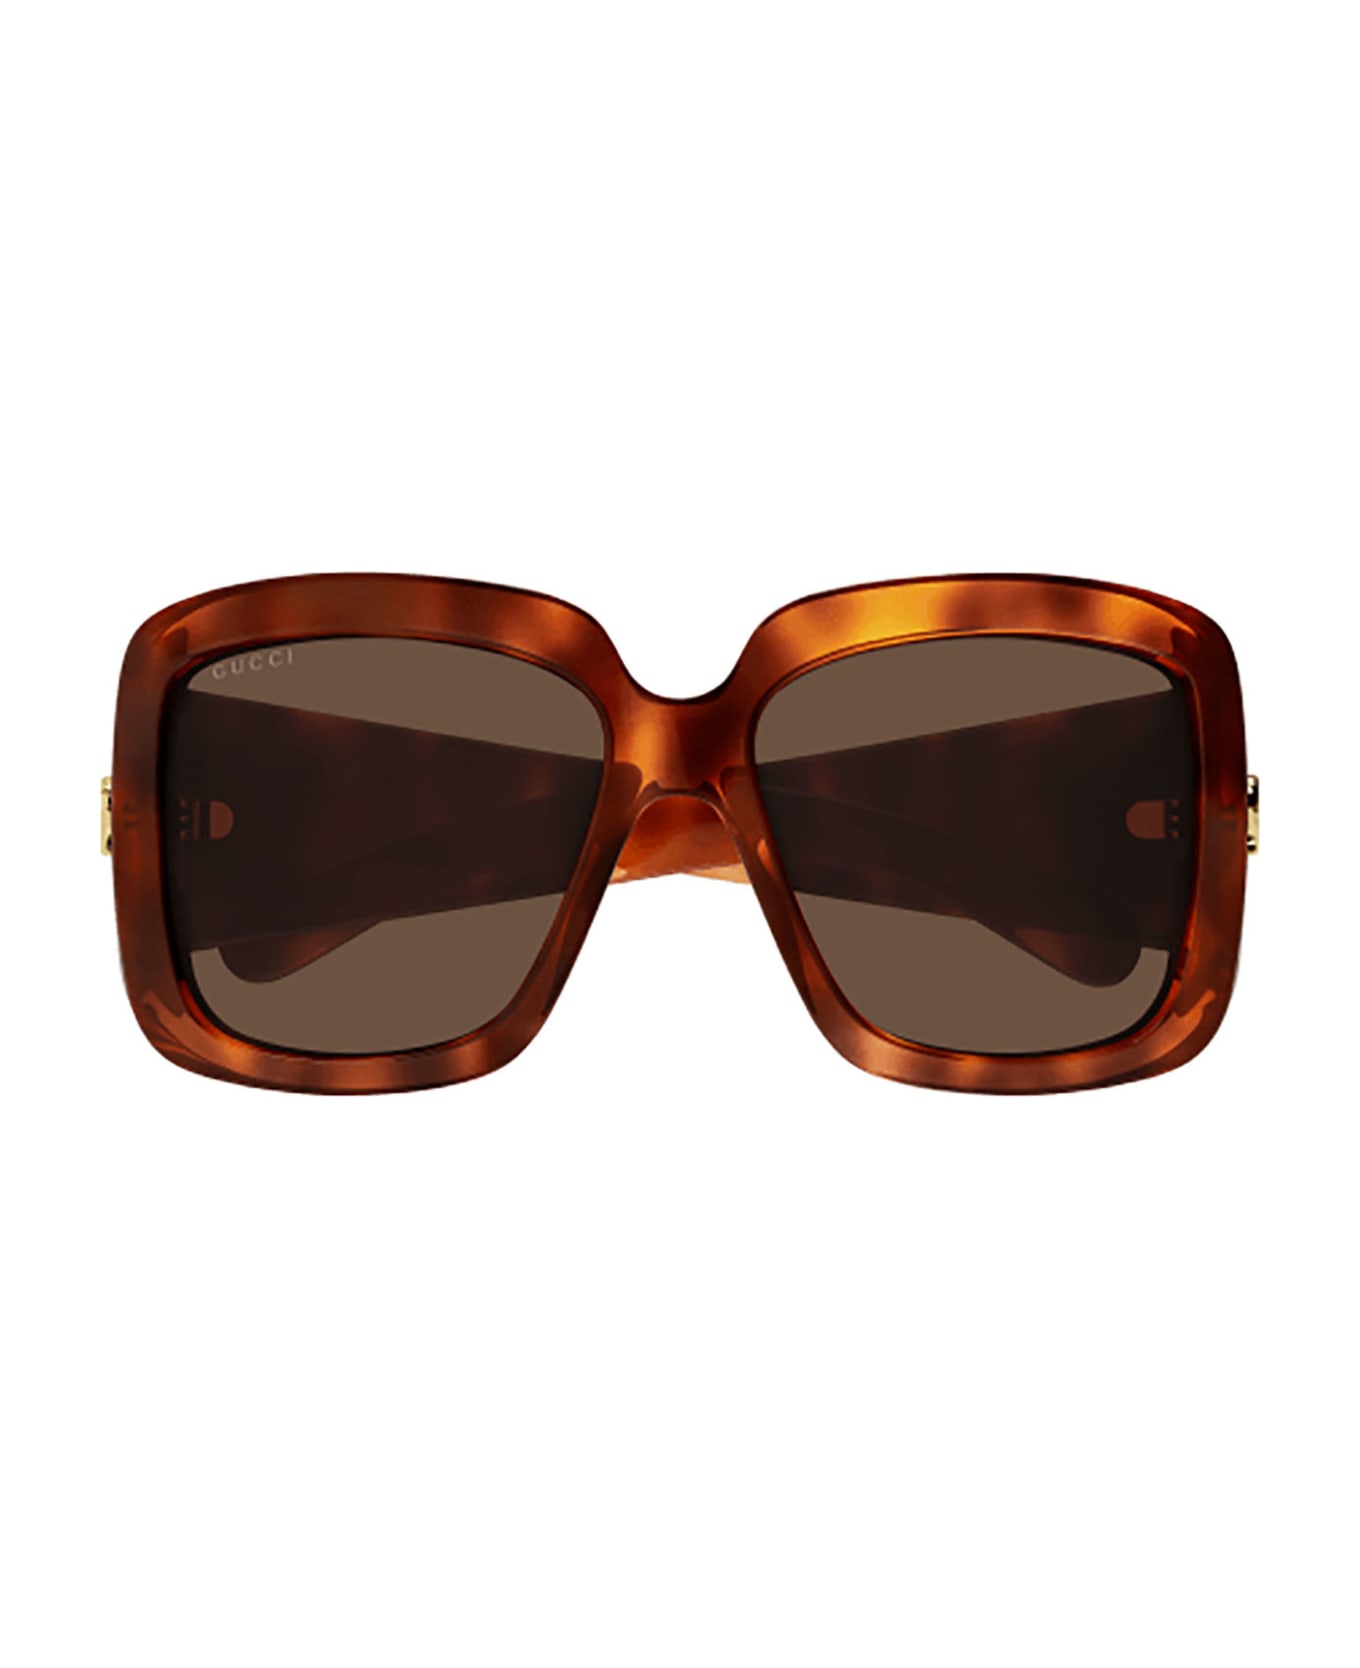 Gucci Eyewear GG1402S Sunglasses - Havana Havana Brown サングラス